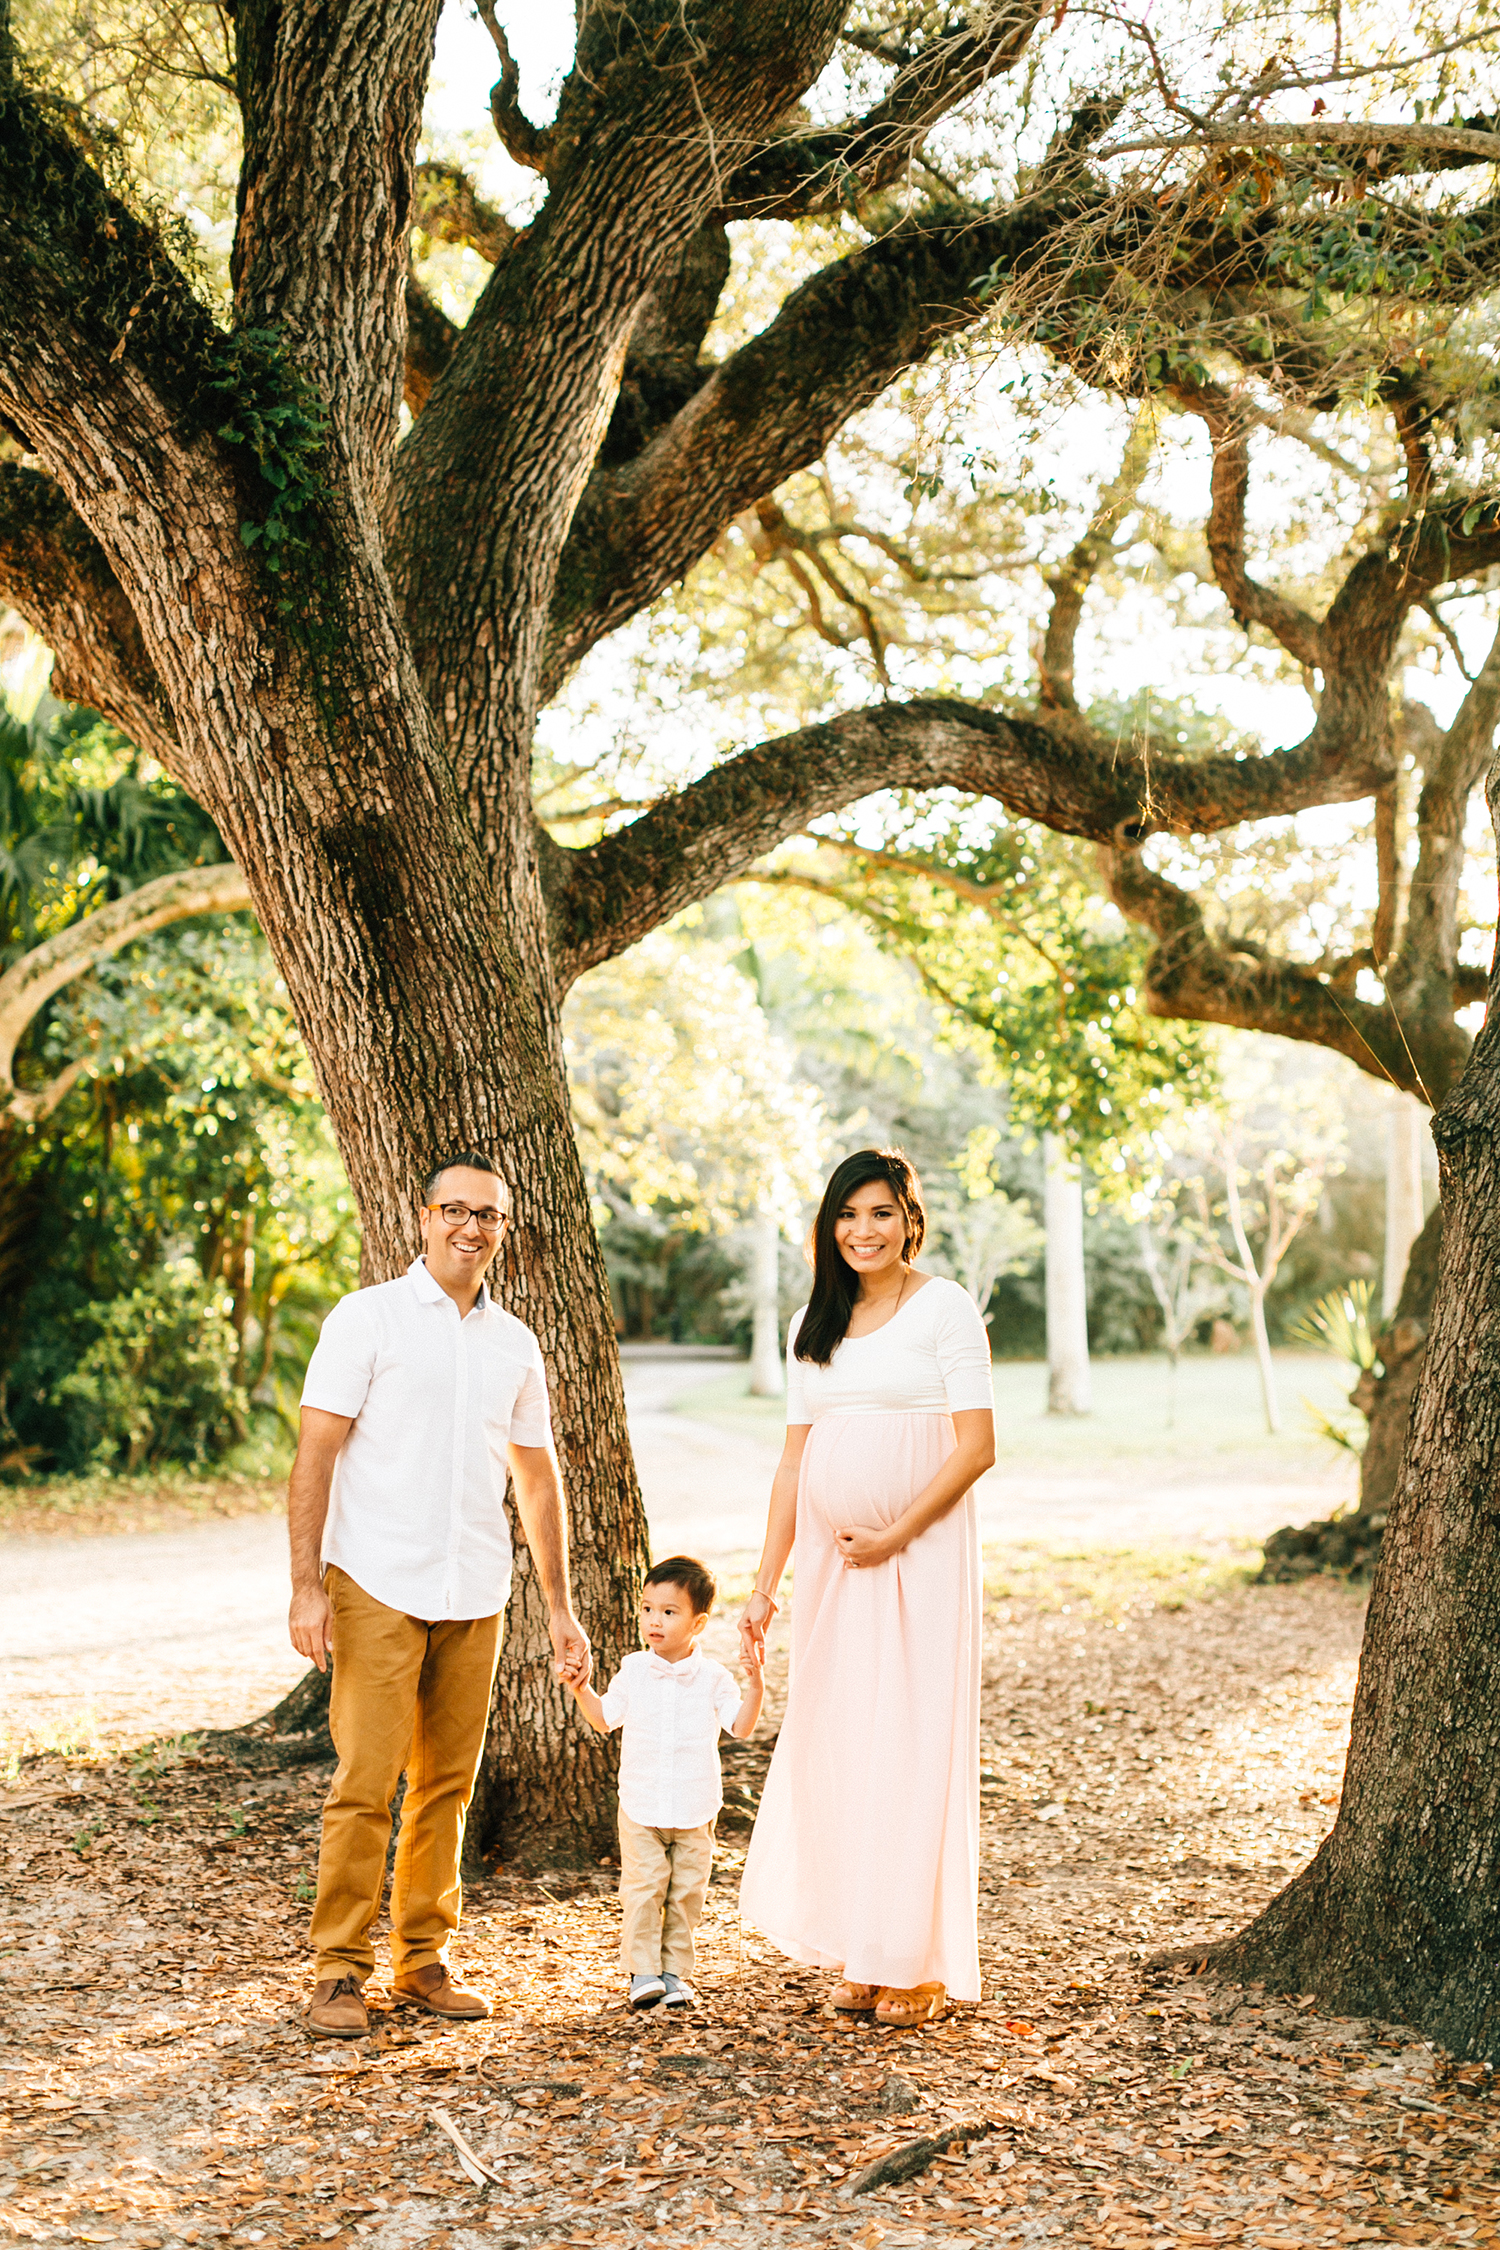 Finding Light Photography Lifestyle Maternity Photographer Florida